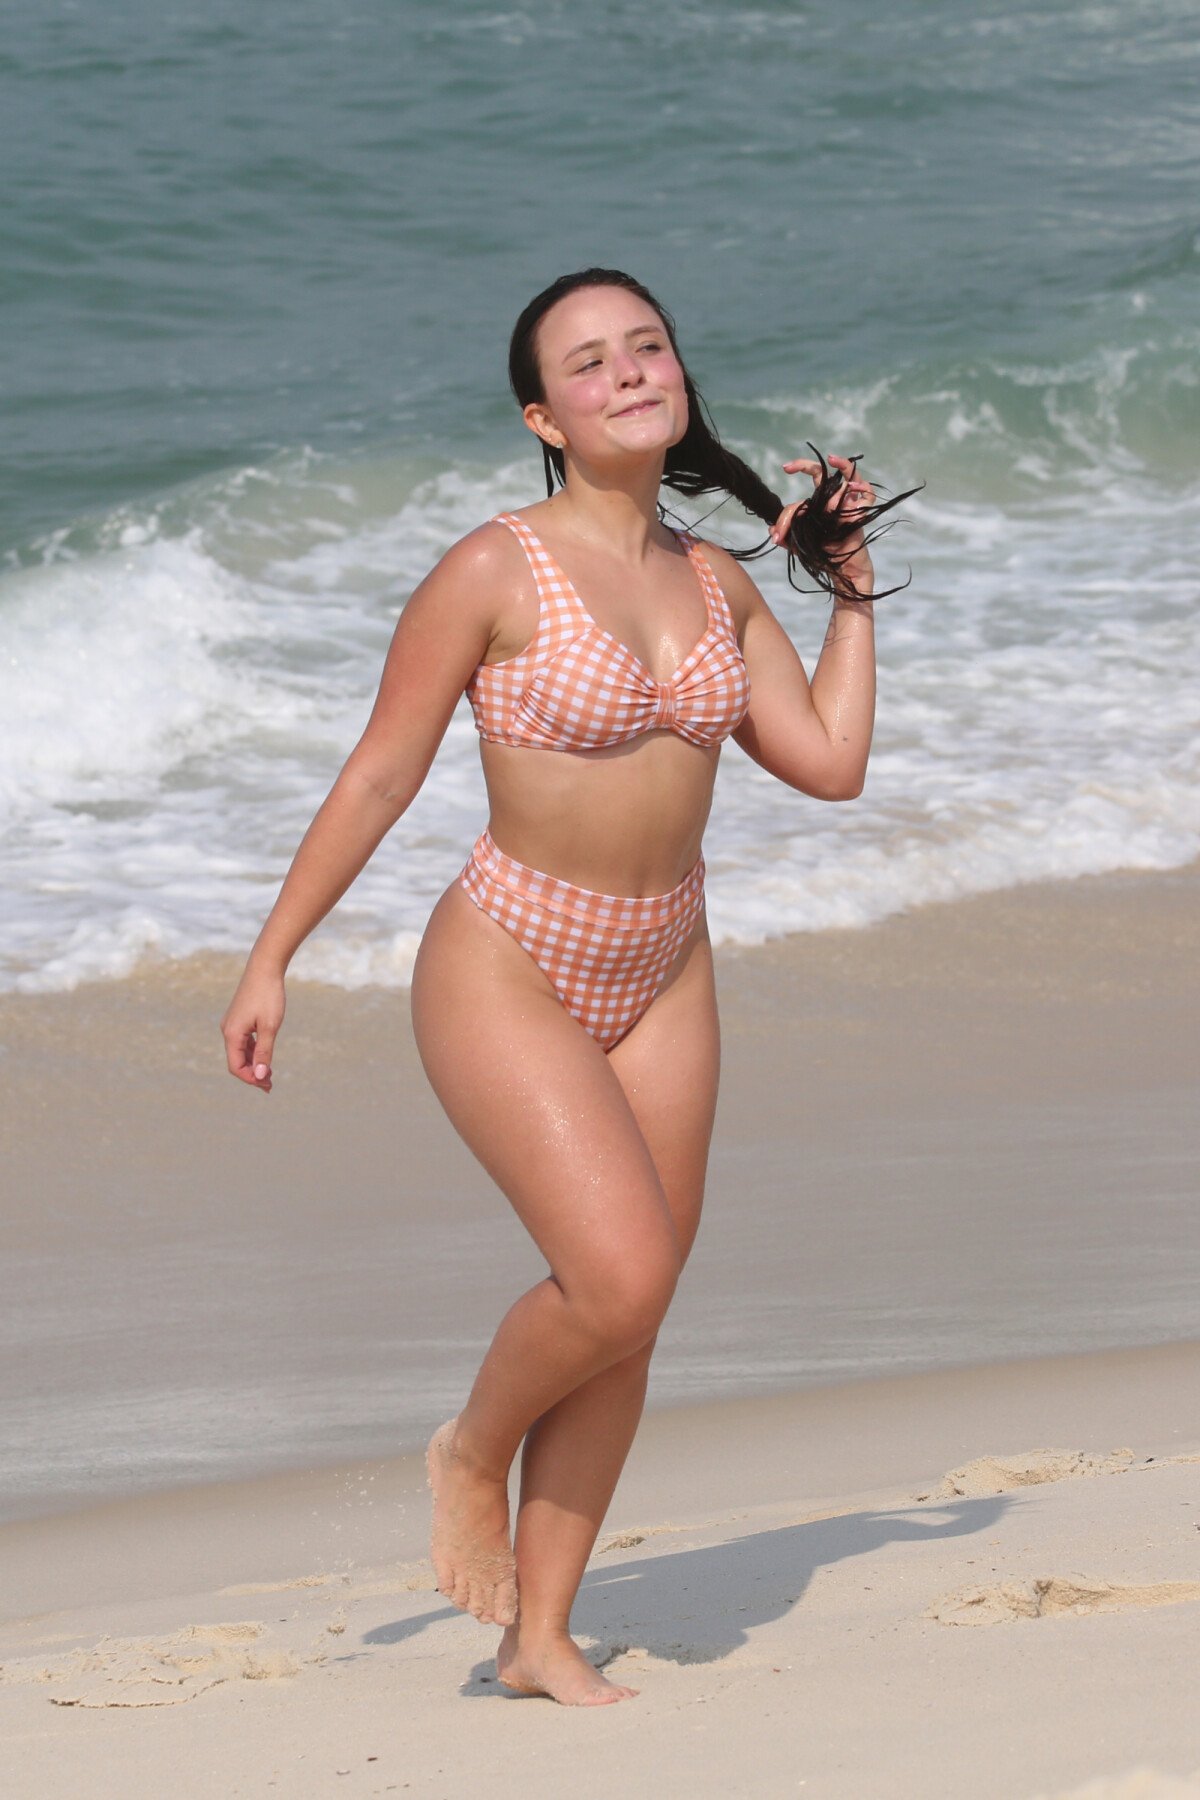 Foto Larissa Manoela De Biquíni Hot Pant Se Refrescou Em Praia Do Rio Purepeople